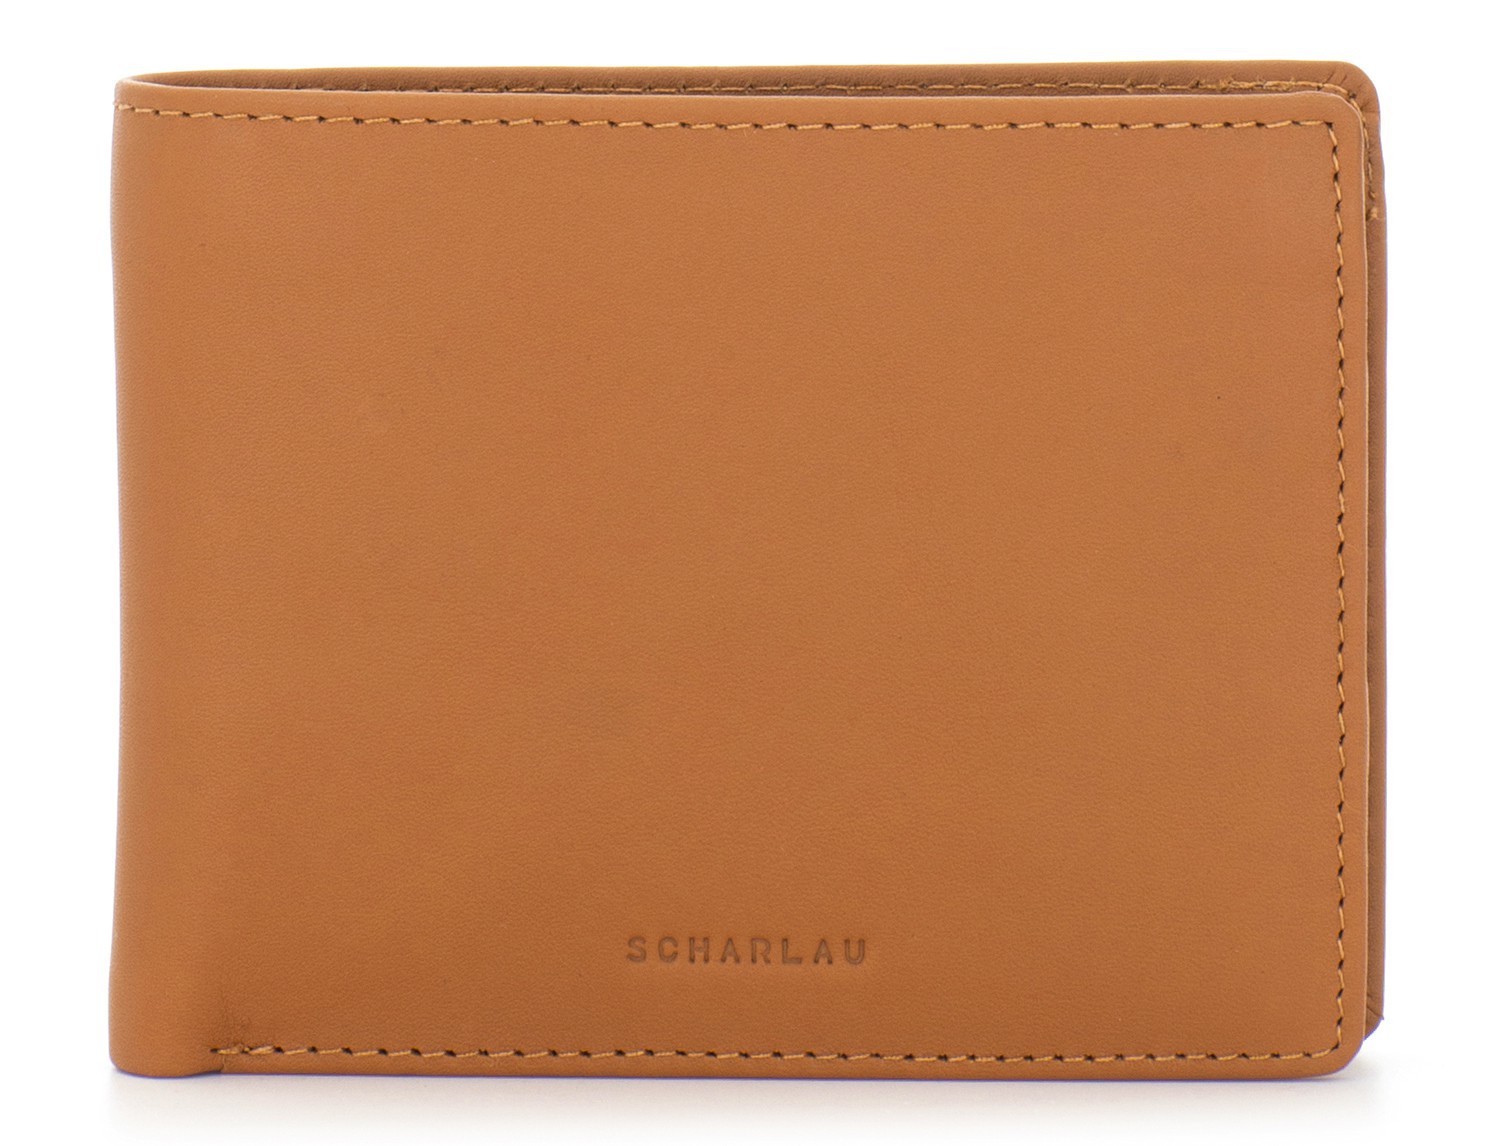 mini leather wallet for men camel front